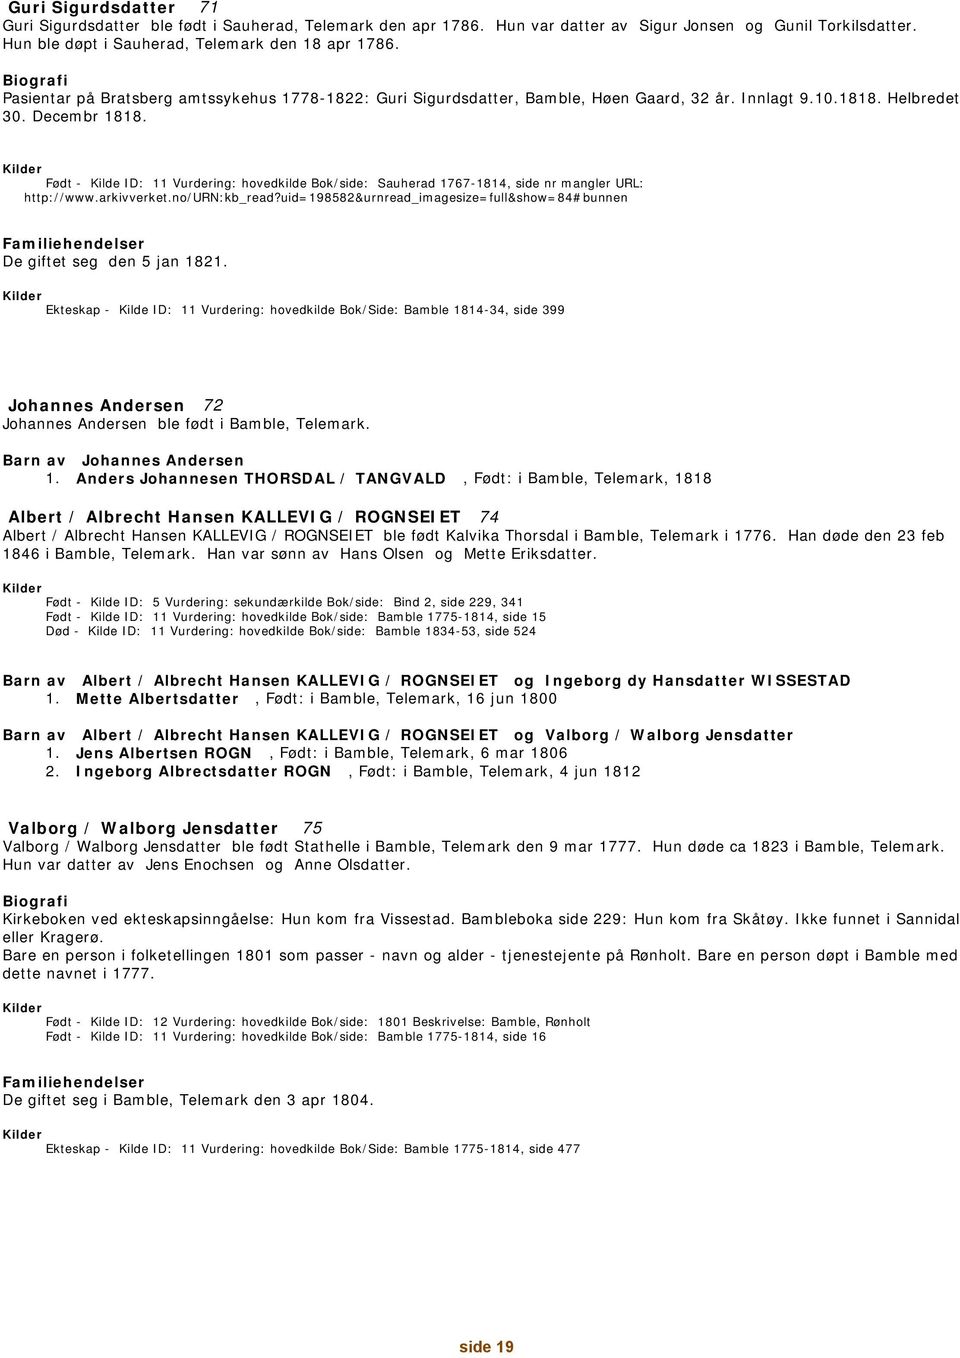 Født - Kilde ID: 11 Vurdering: hovedkilde Bok/side: Sauherad 1767-1814, side nr mangler URL: http://www.arkivverket.no/urn:kb_read?